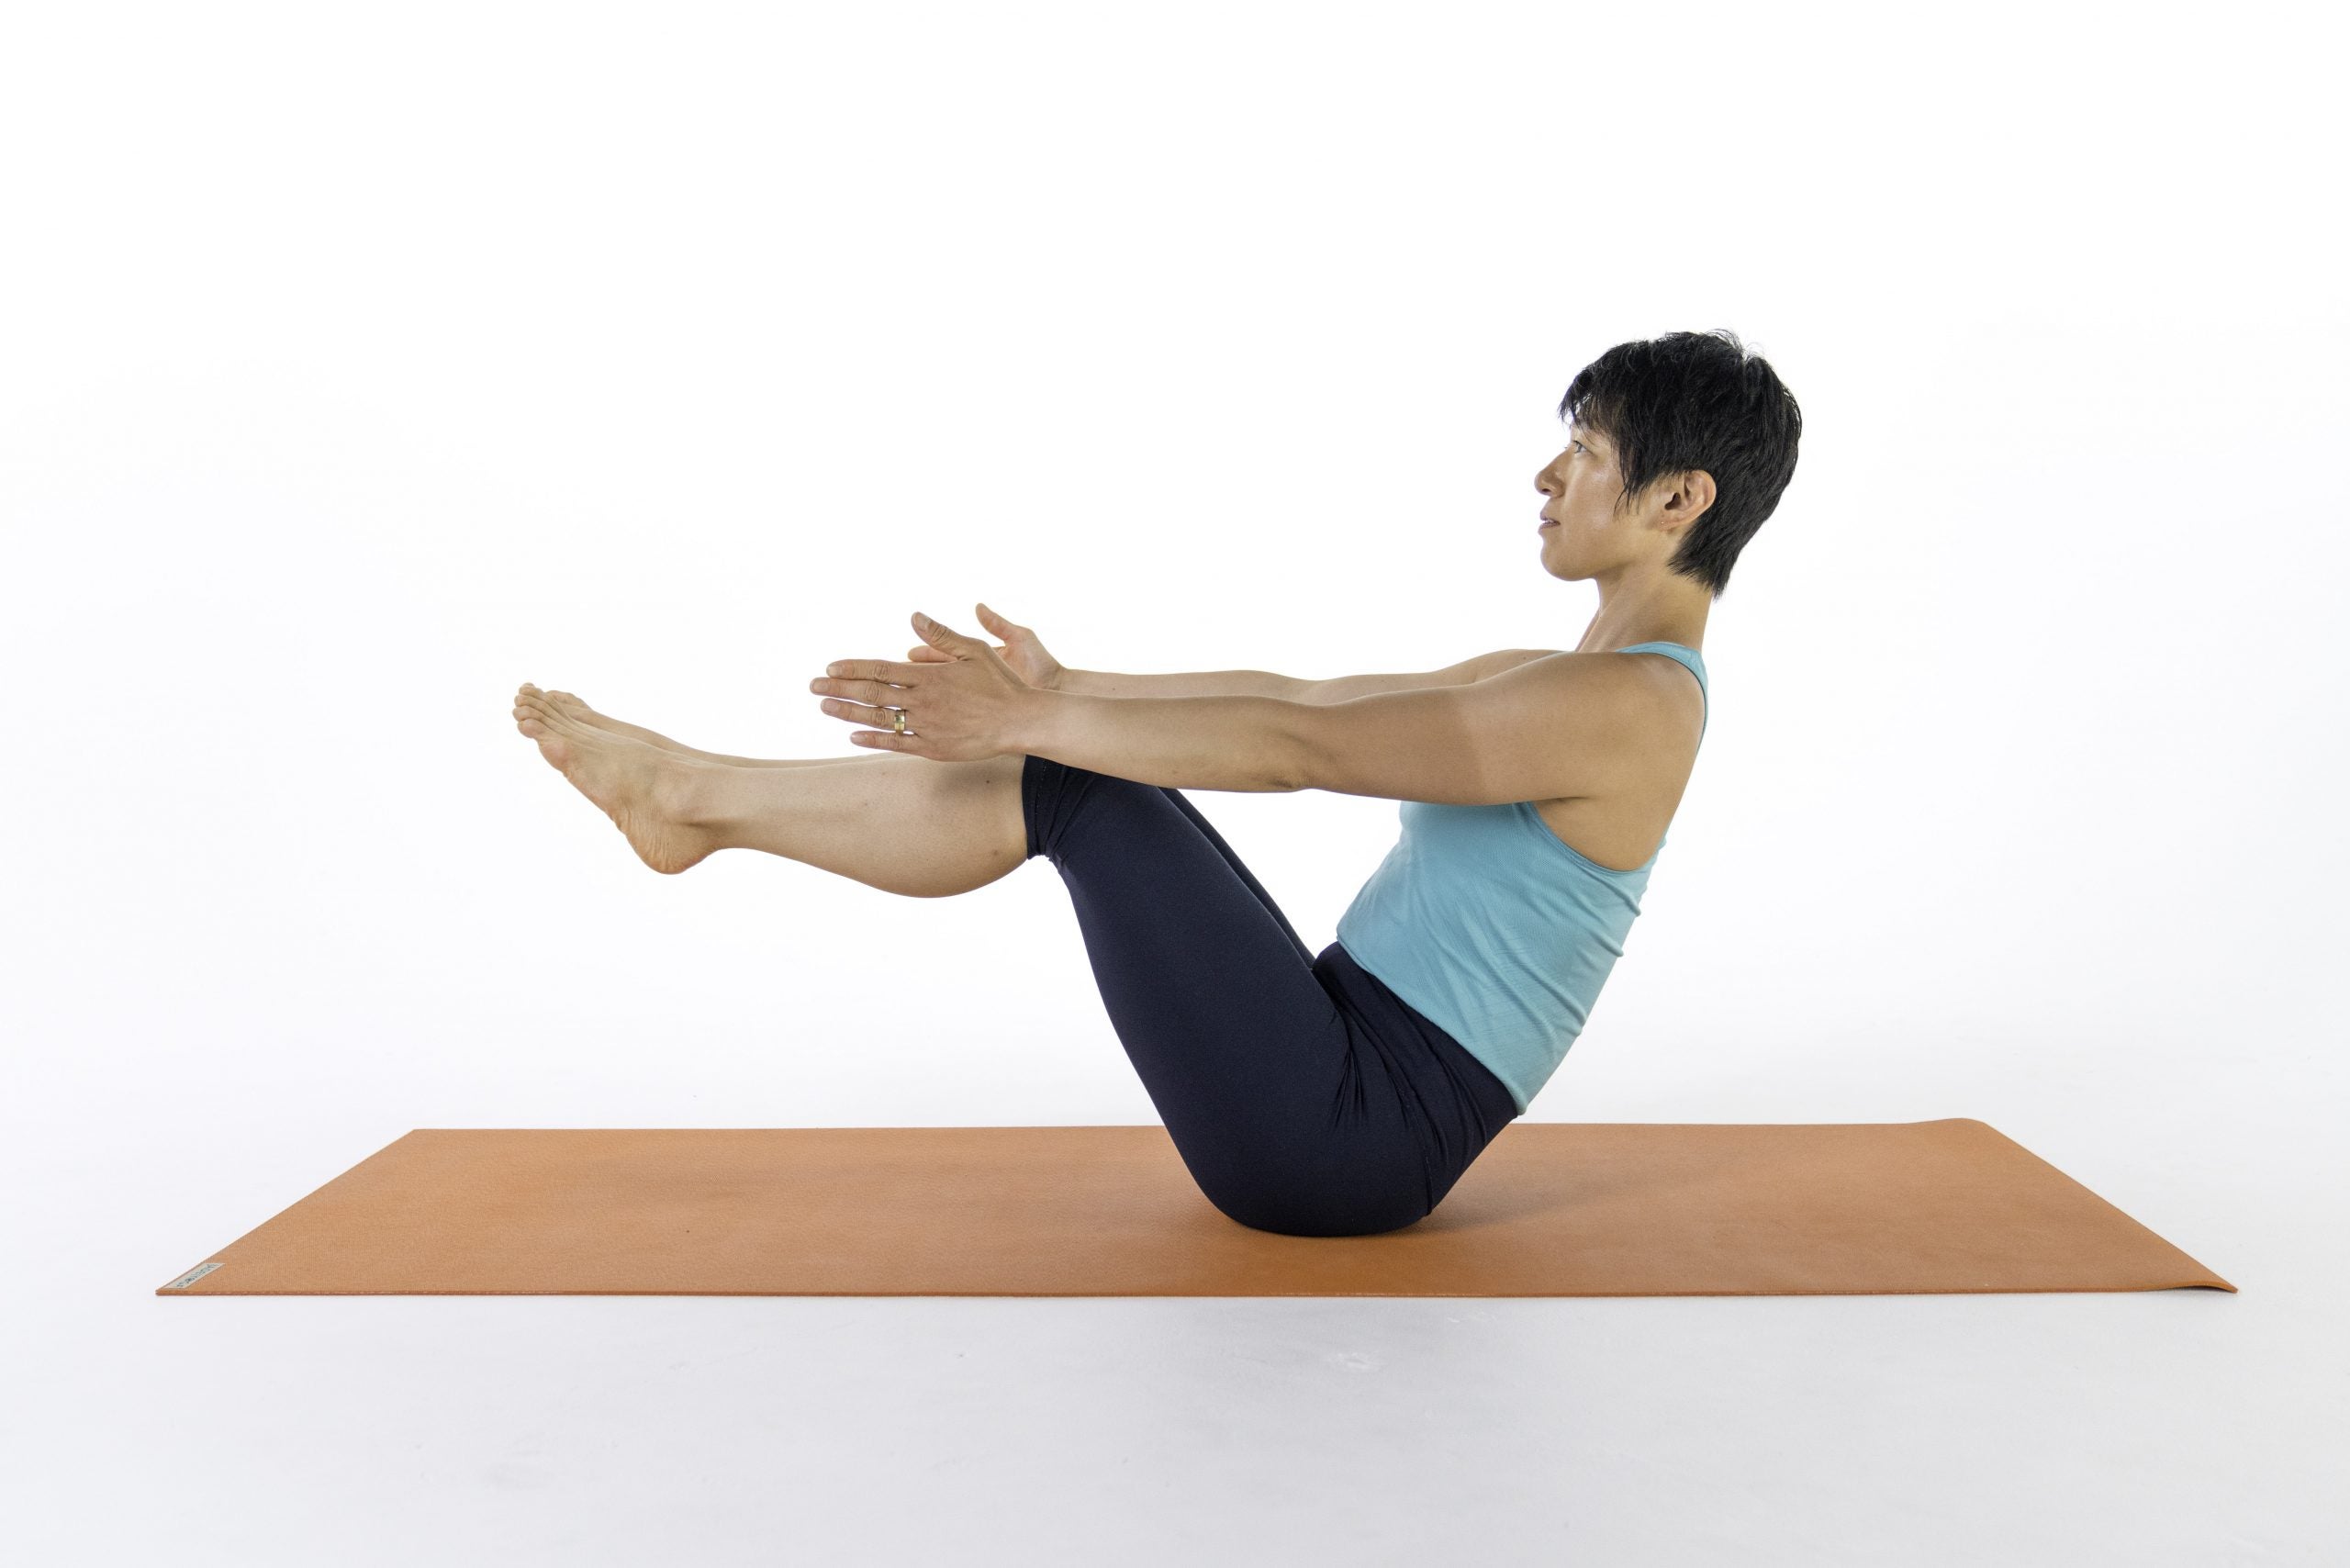 Goddess Yoga Pose Tutorial (4 min) - How To Do Yoga Poses - YouTube